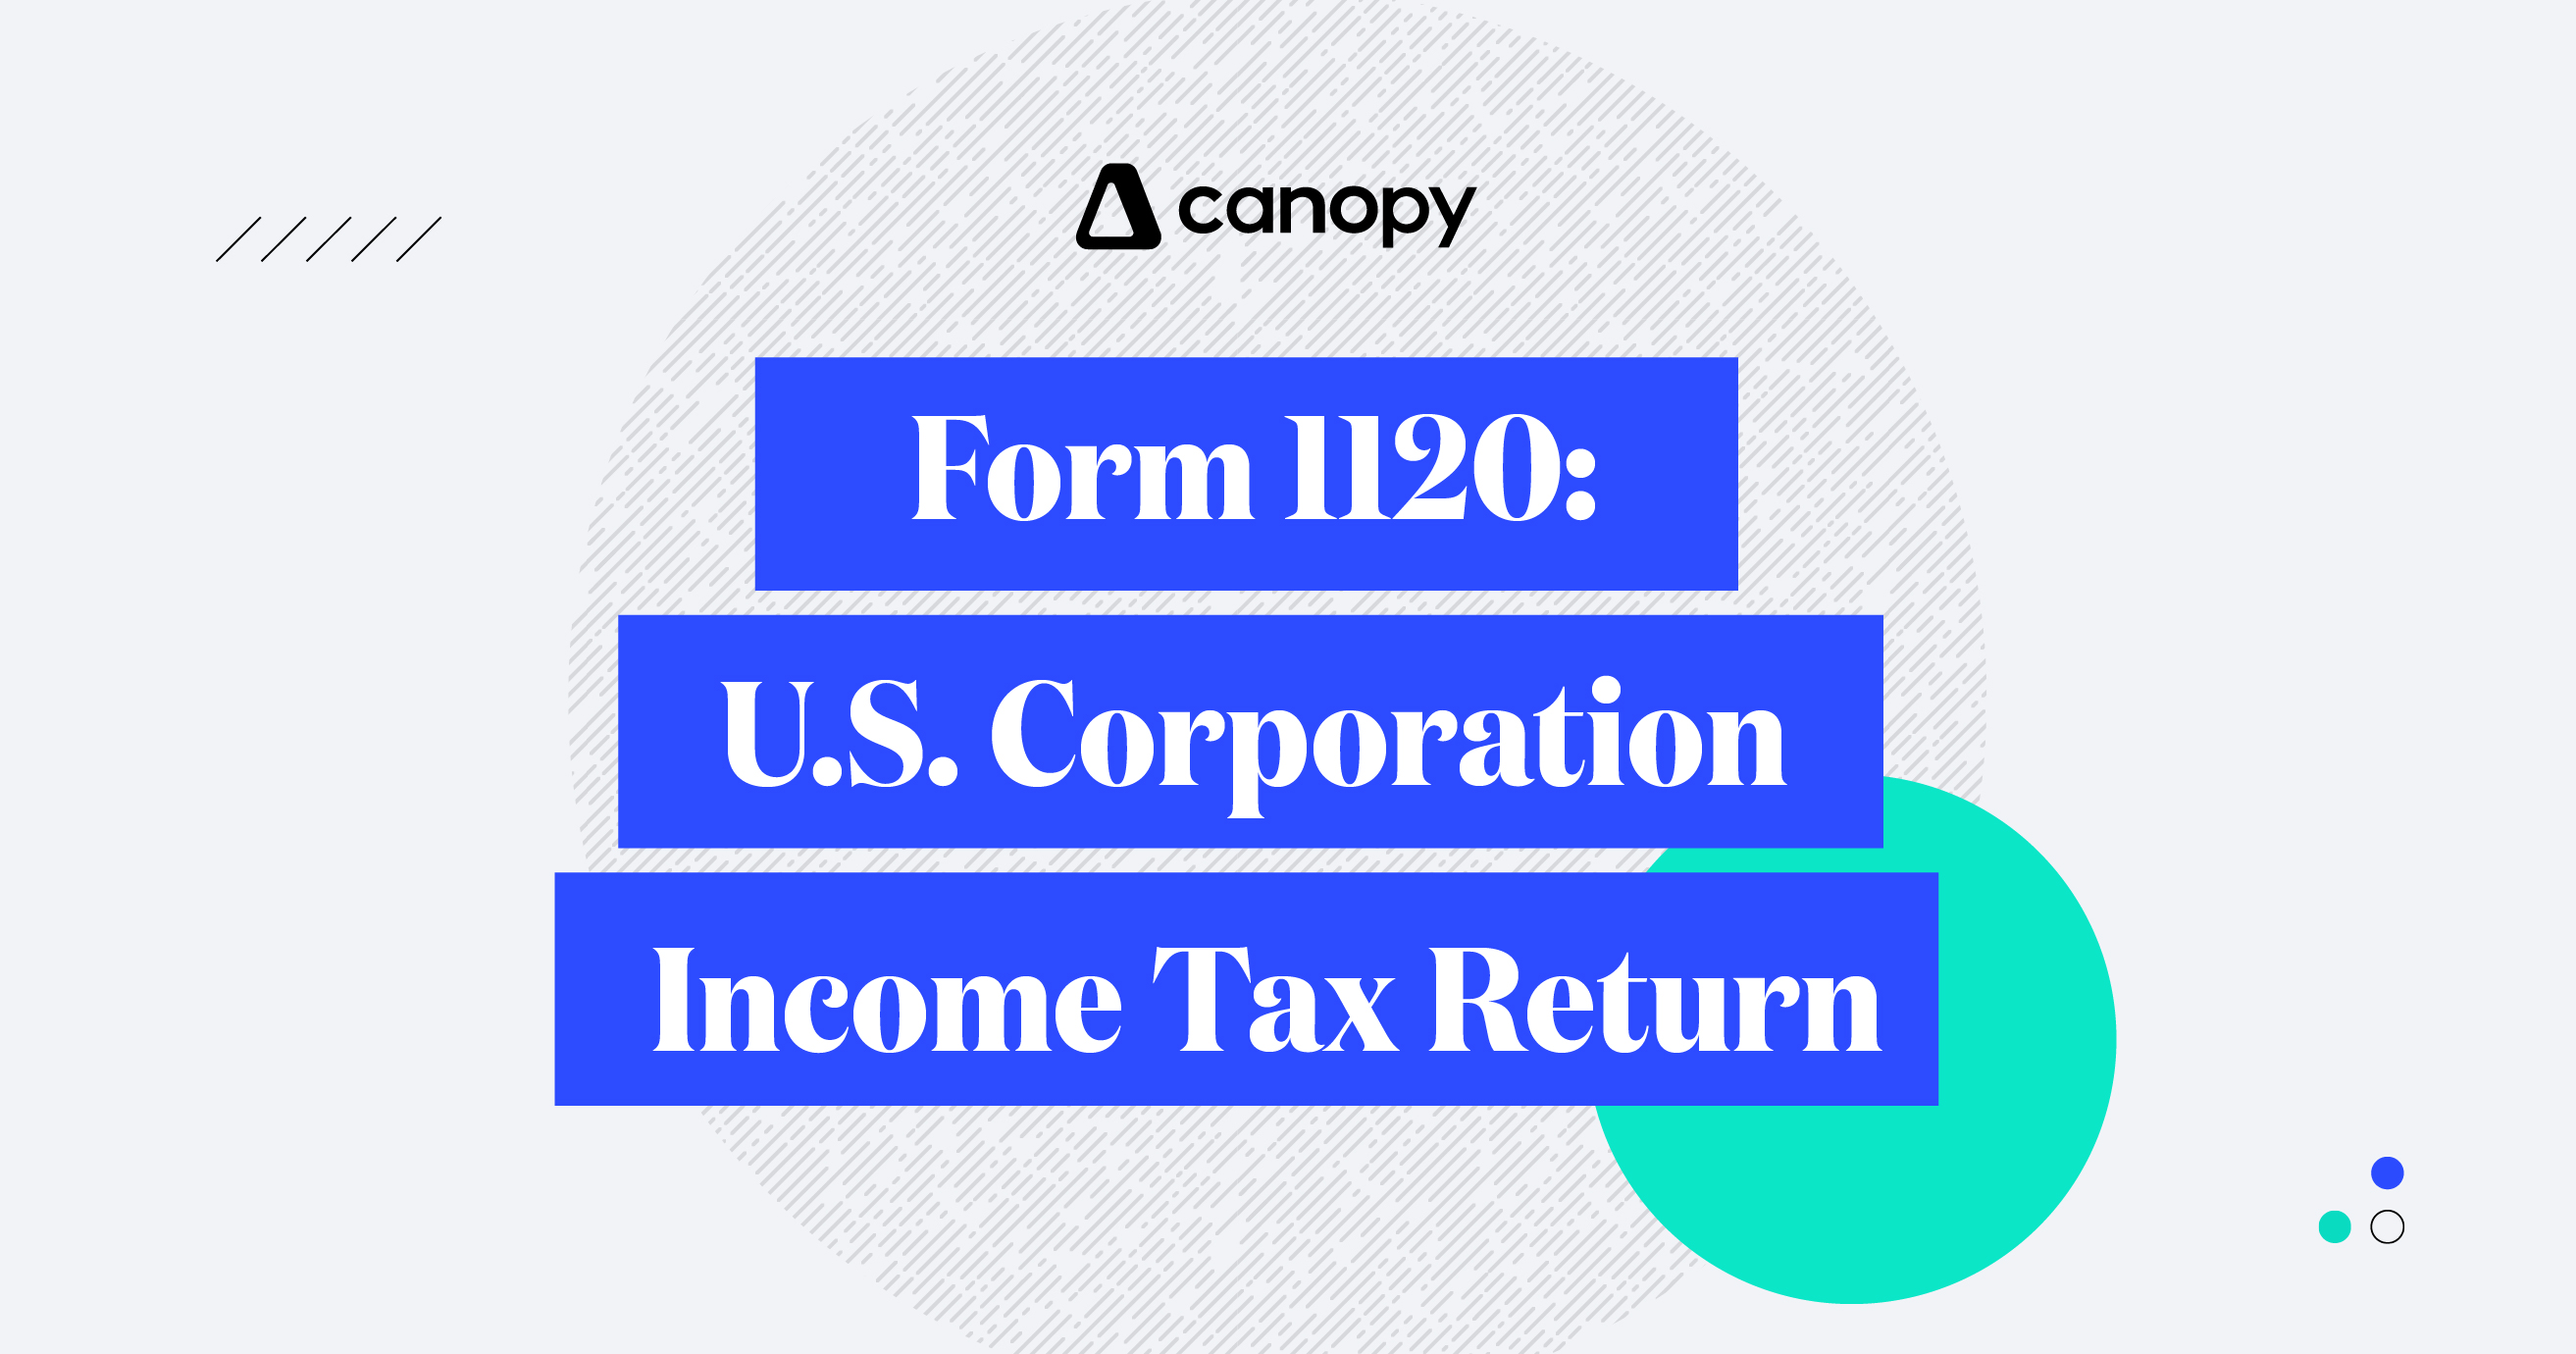 Form 1120: U.S. Corporation Income Tax Return